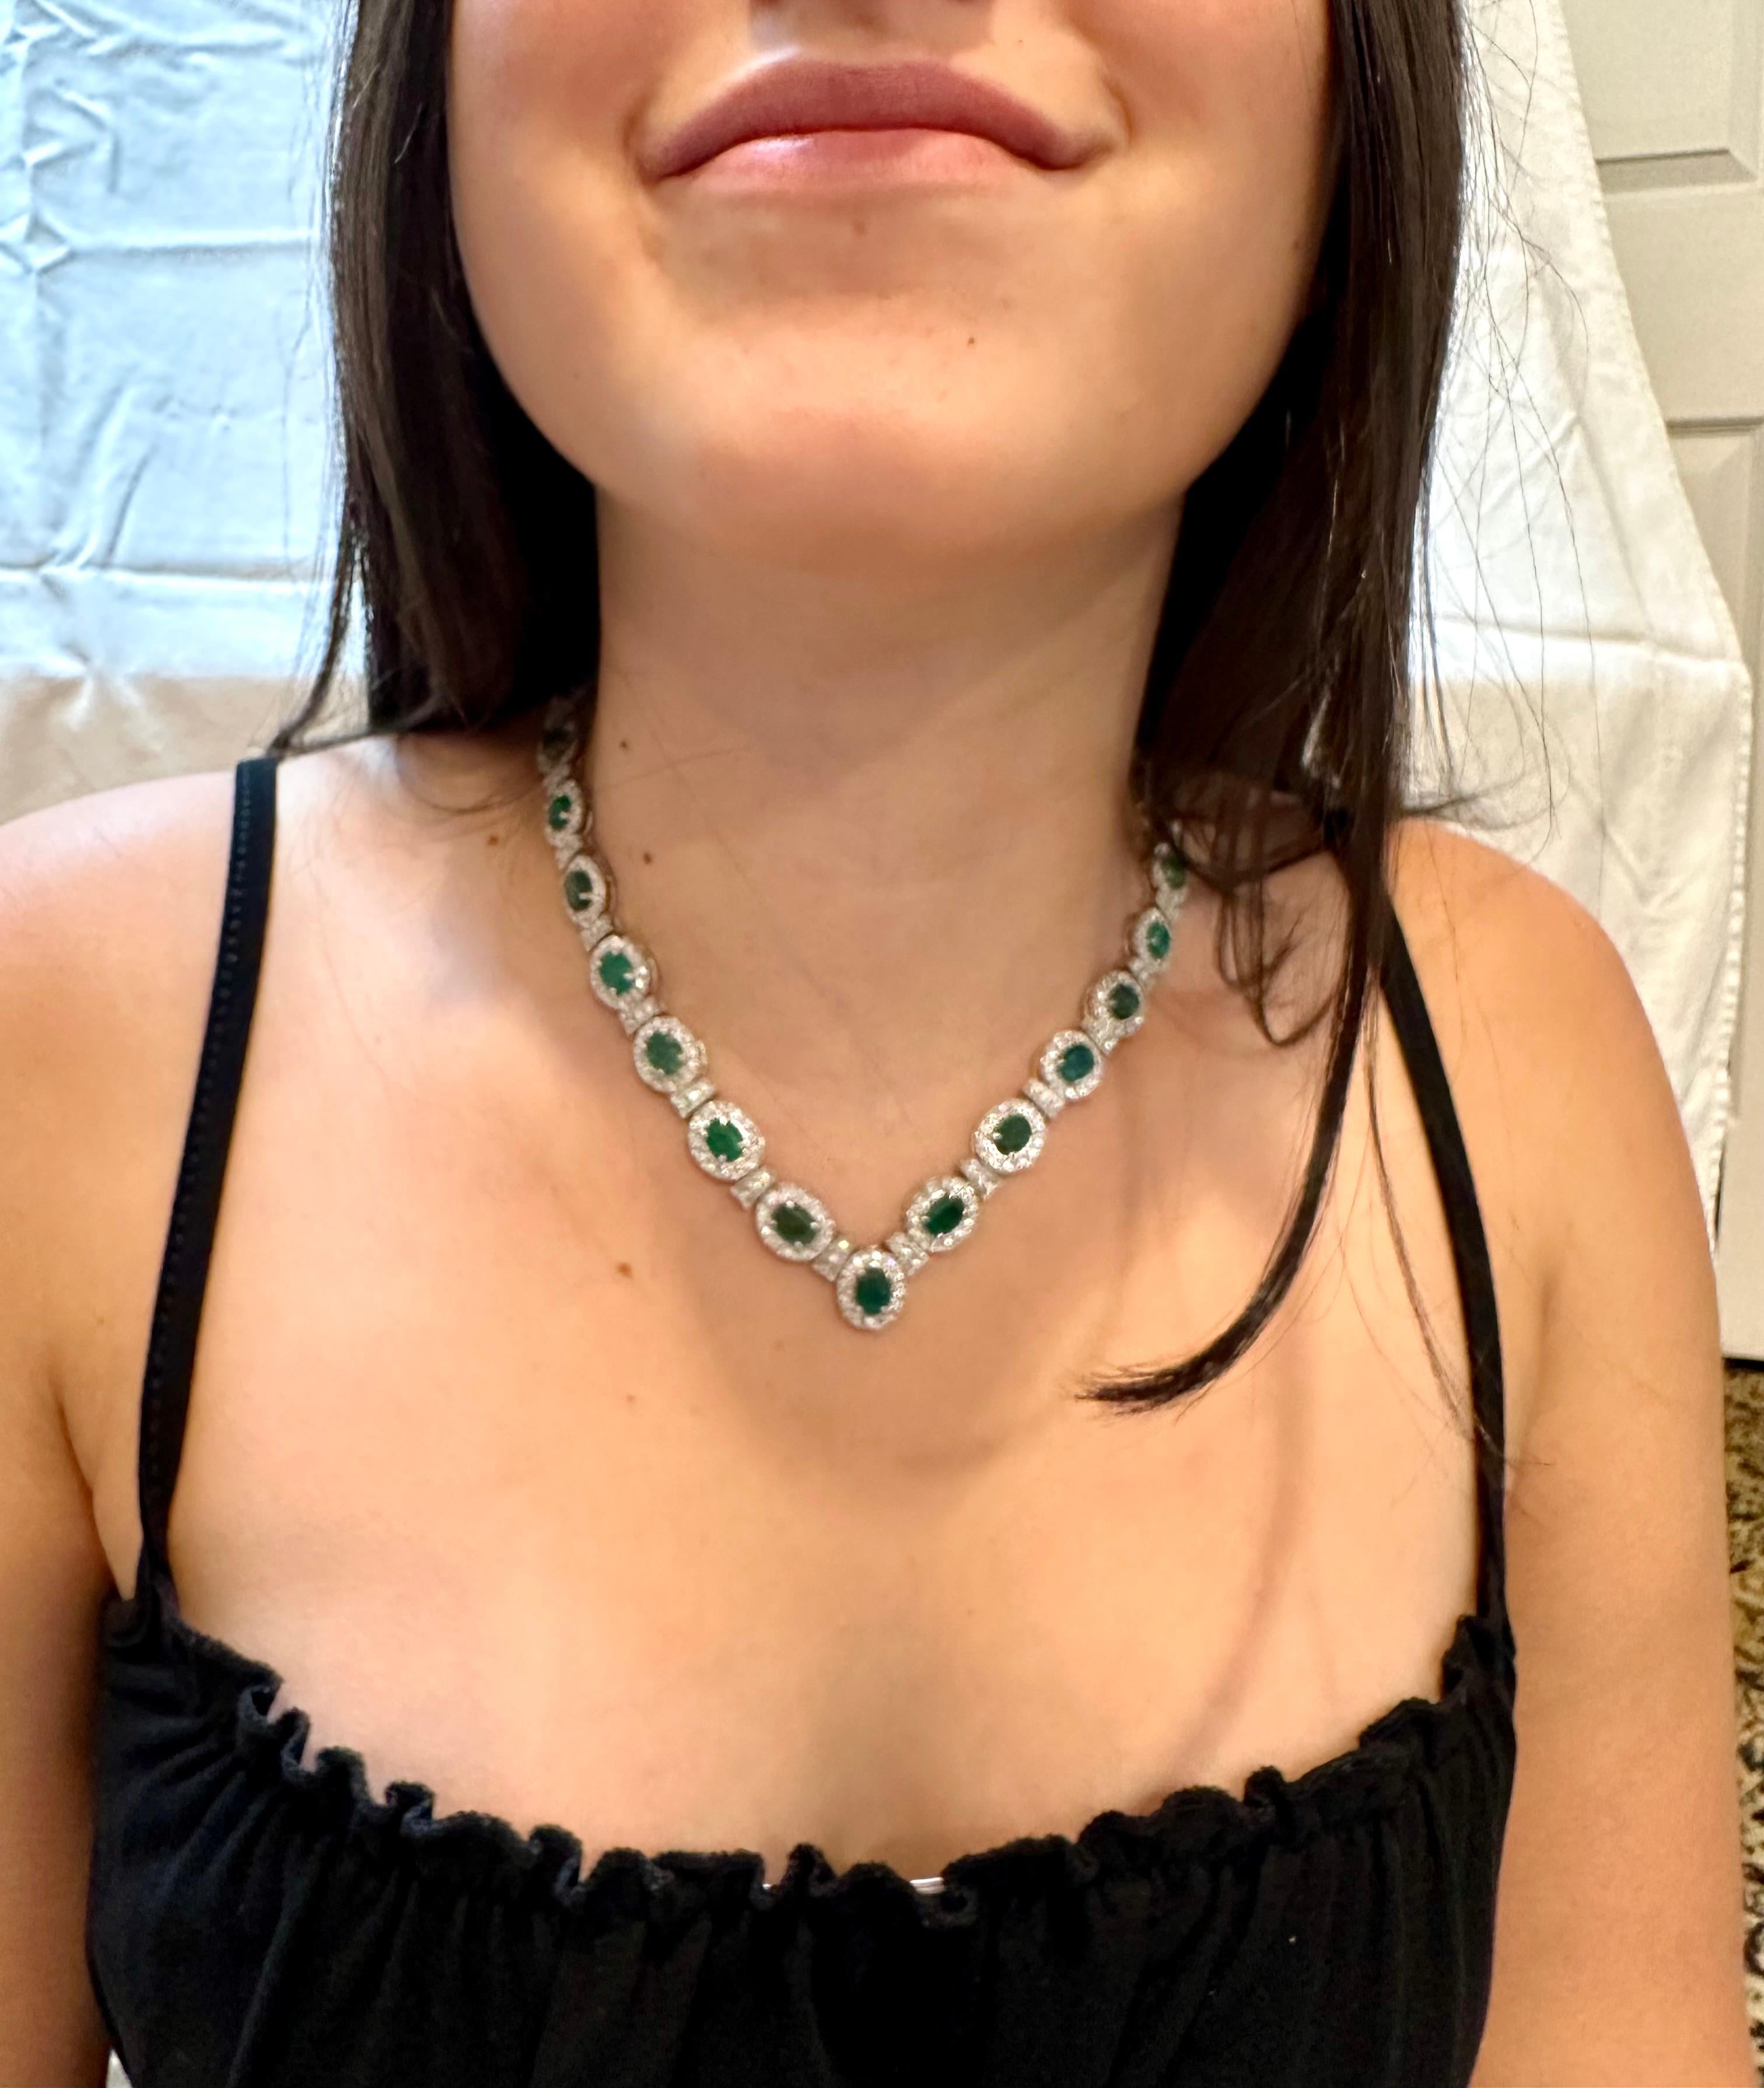 28 Carat Oval Shape Natural Emerald & 5 Carat Diamond Necklace in 14 Karat Gold For Sale 11